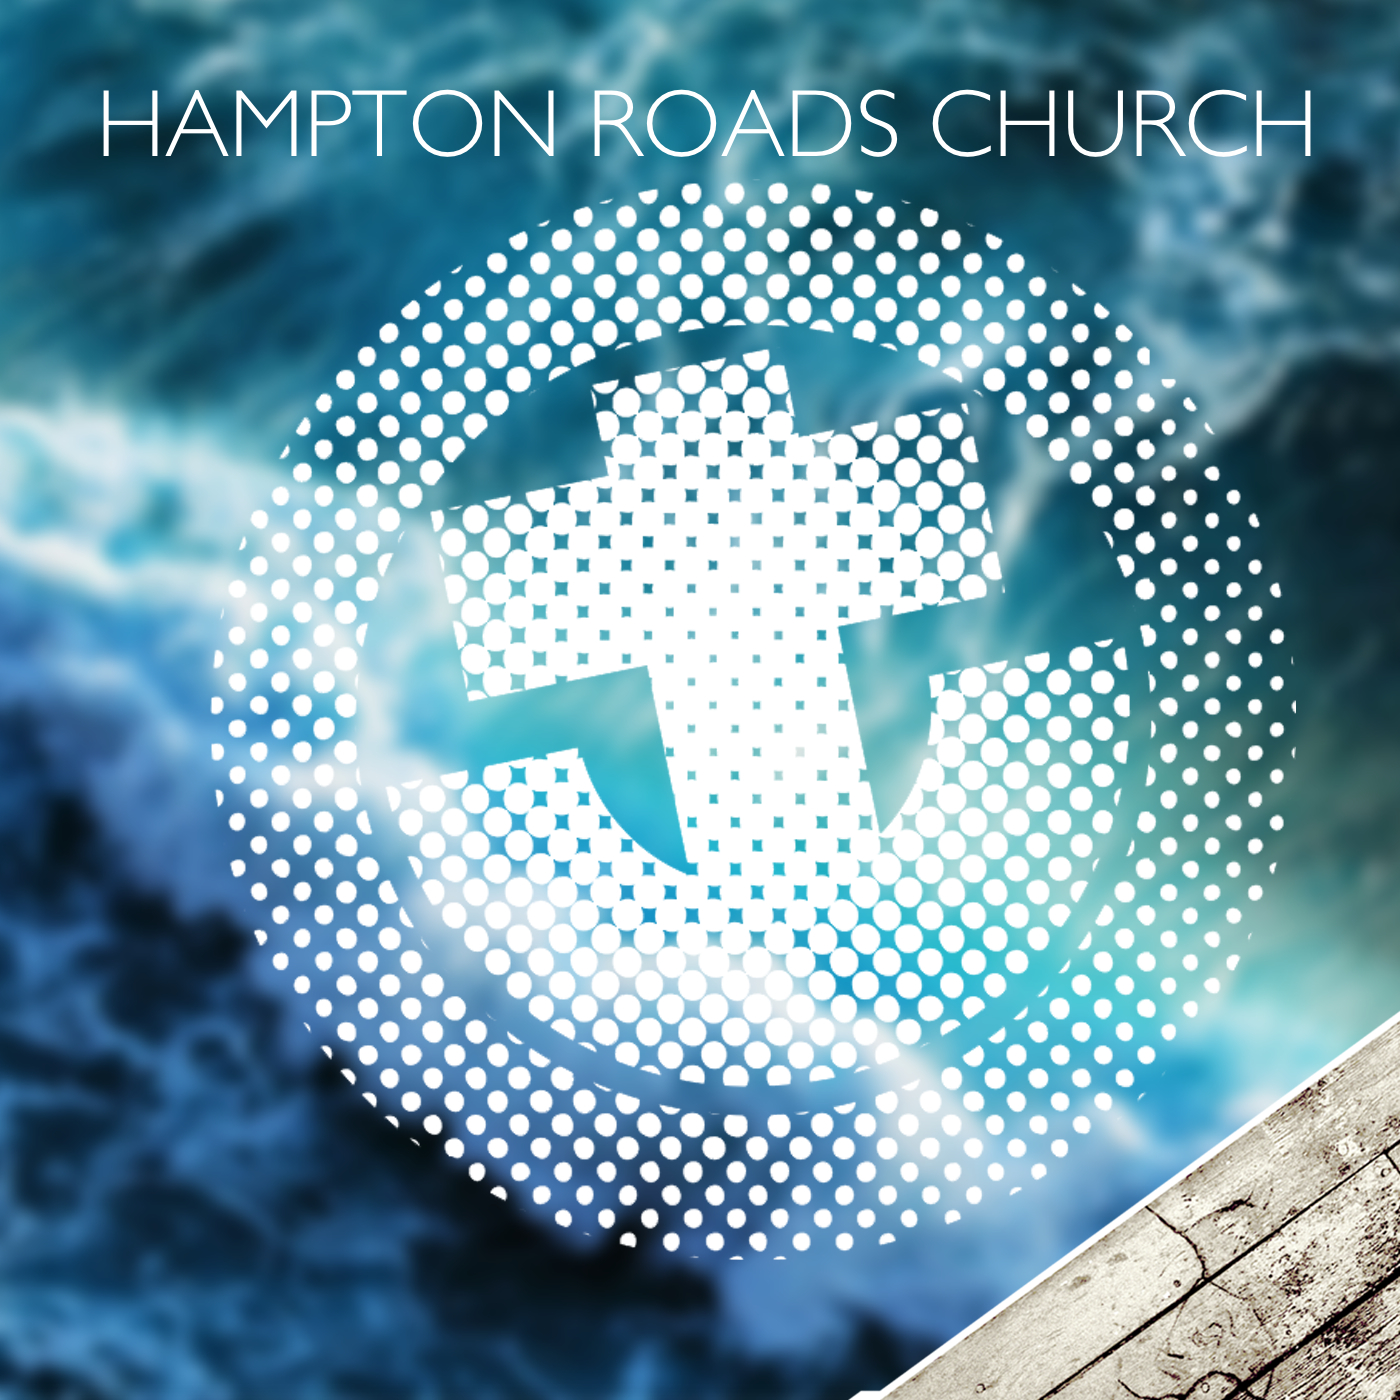 Luke - HAMPTON ROADS CHURCH